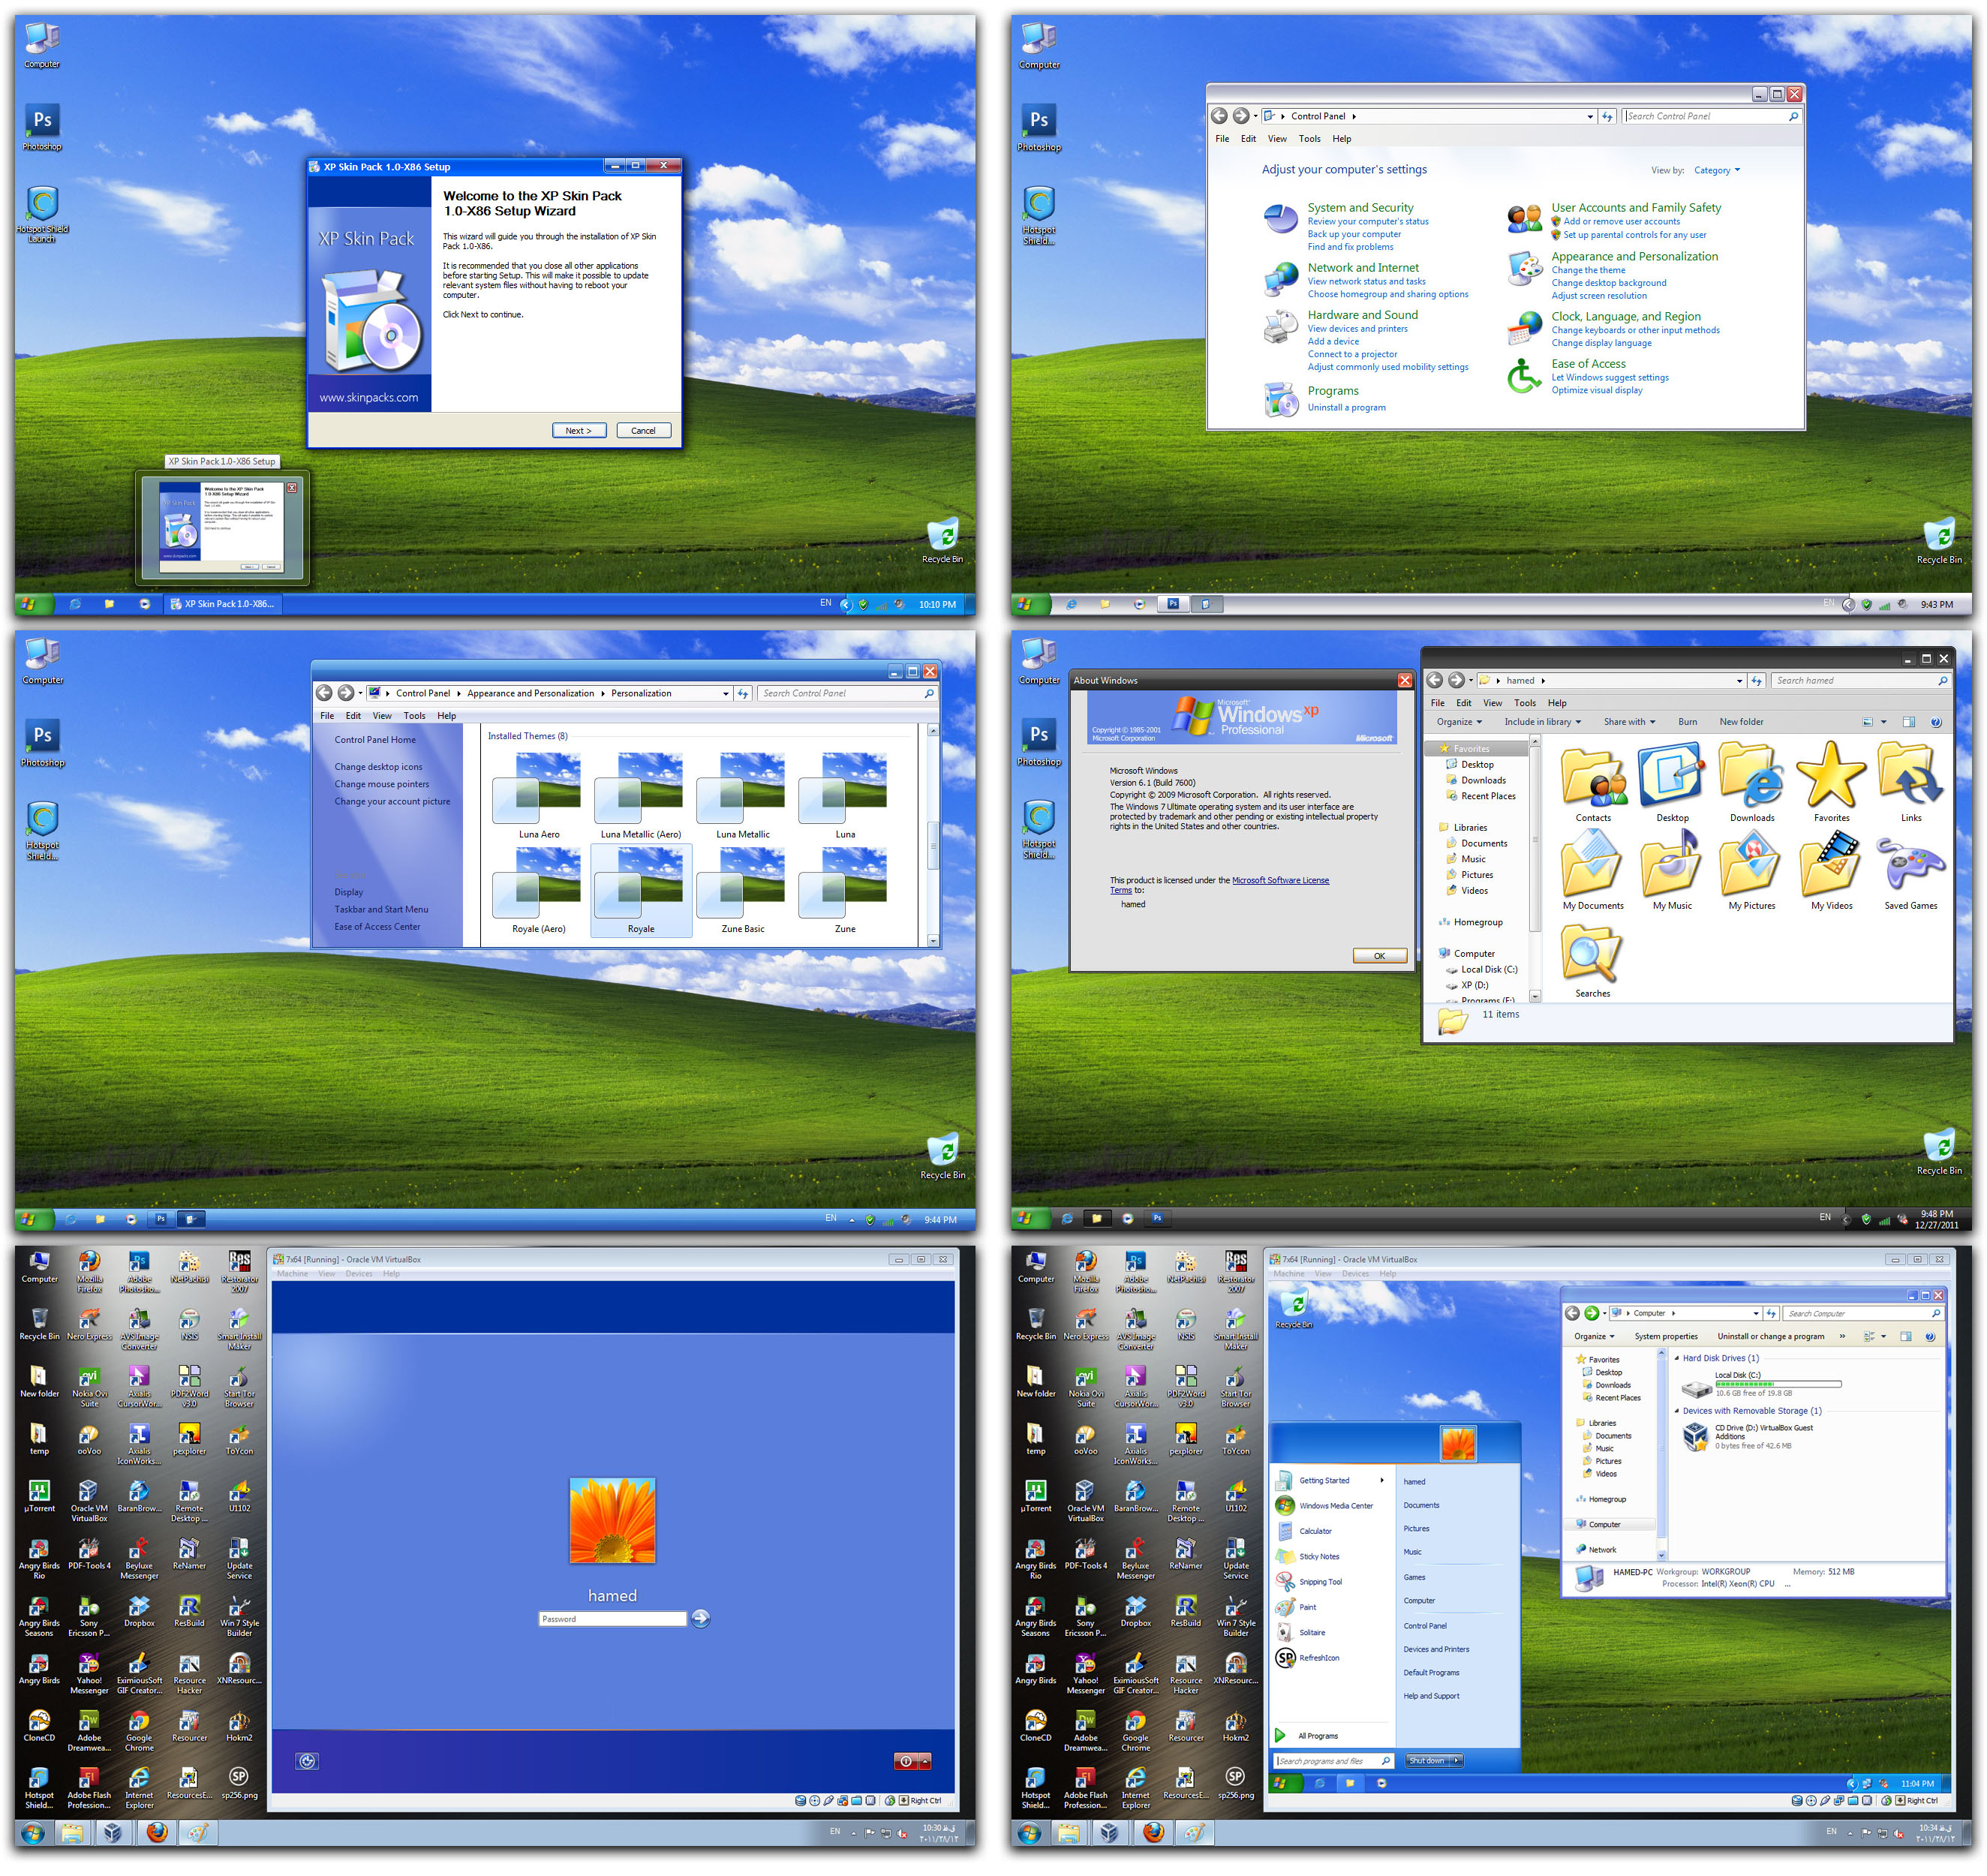 windows 8.1 skin pack download